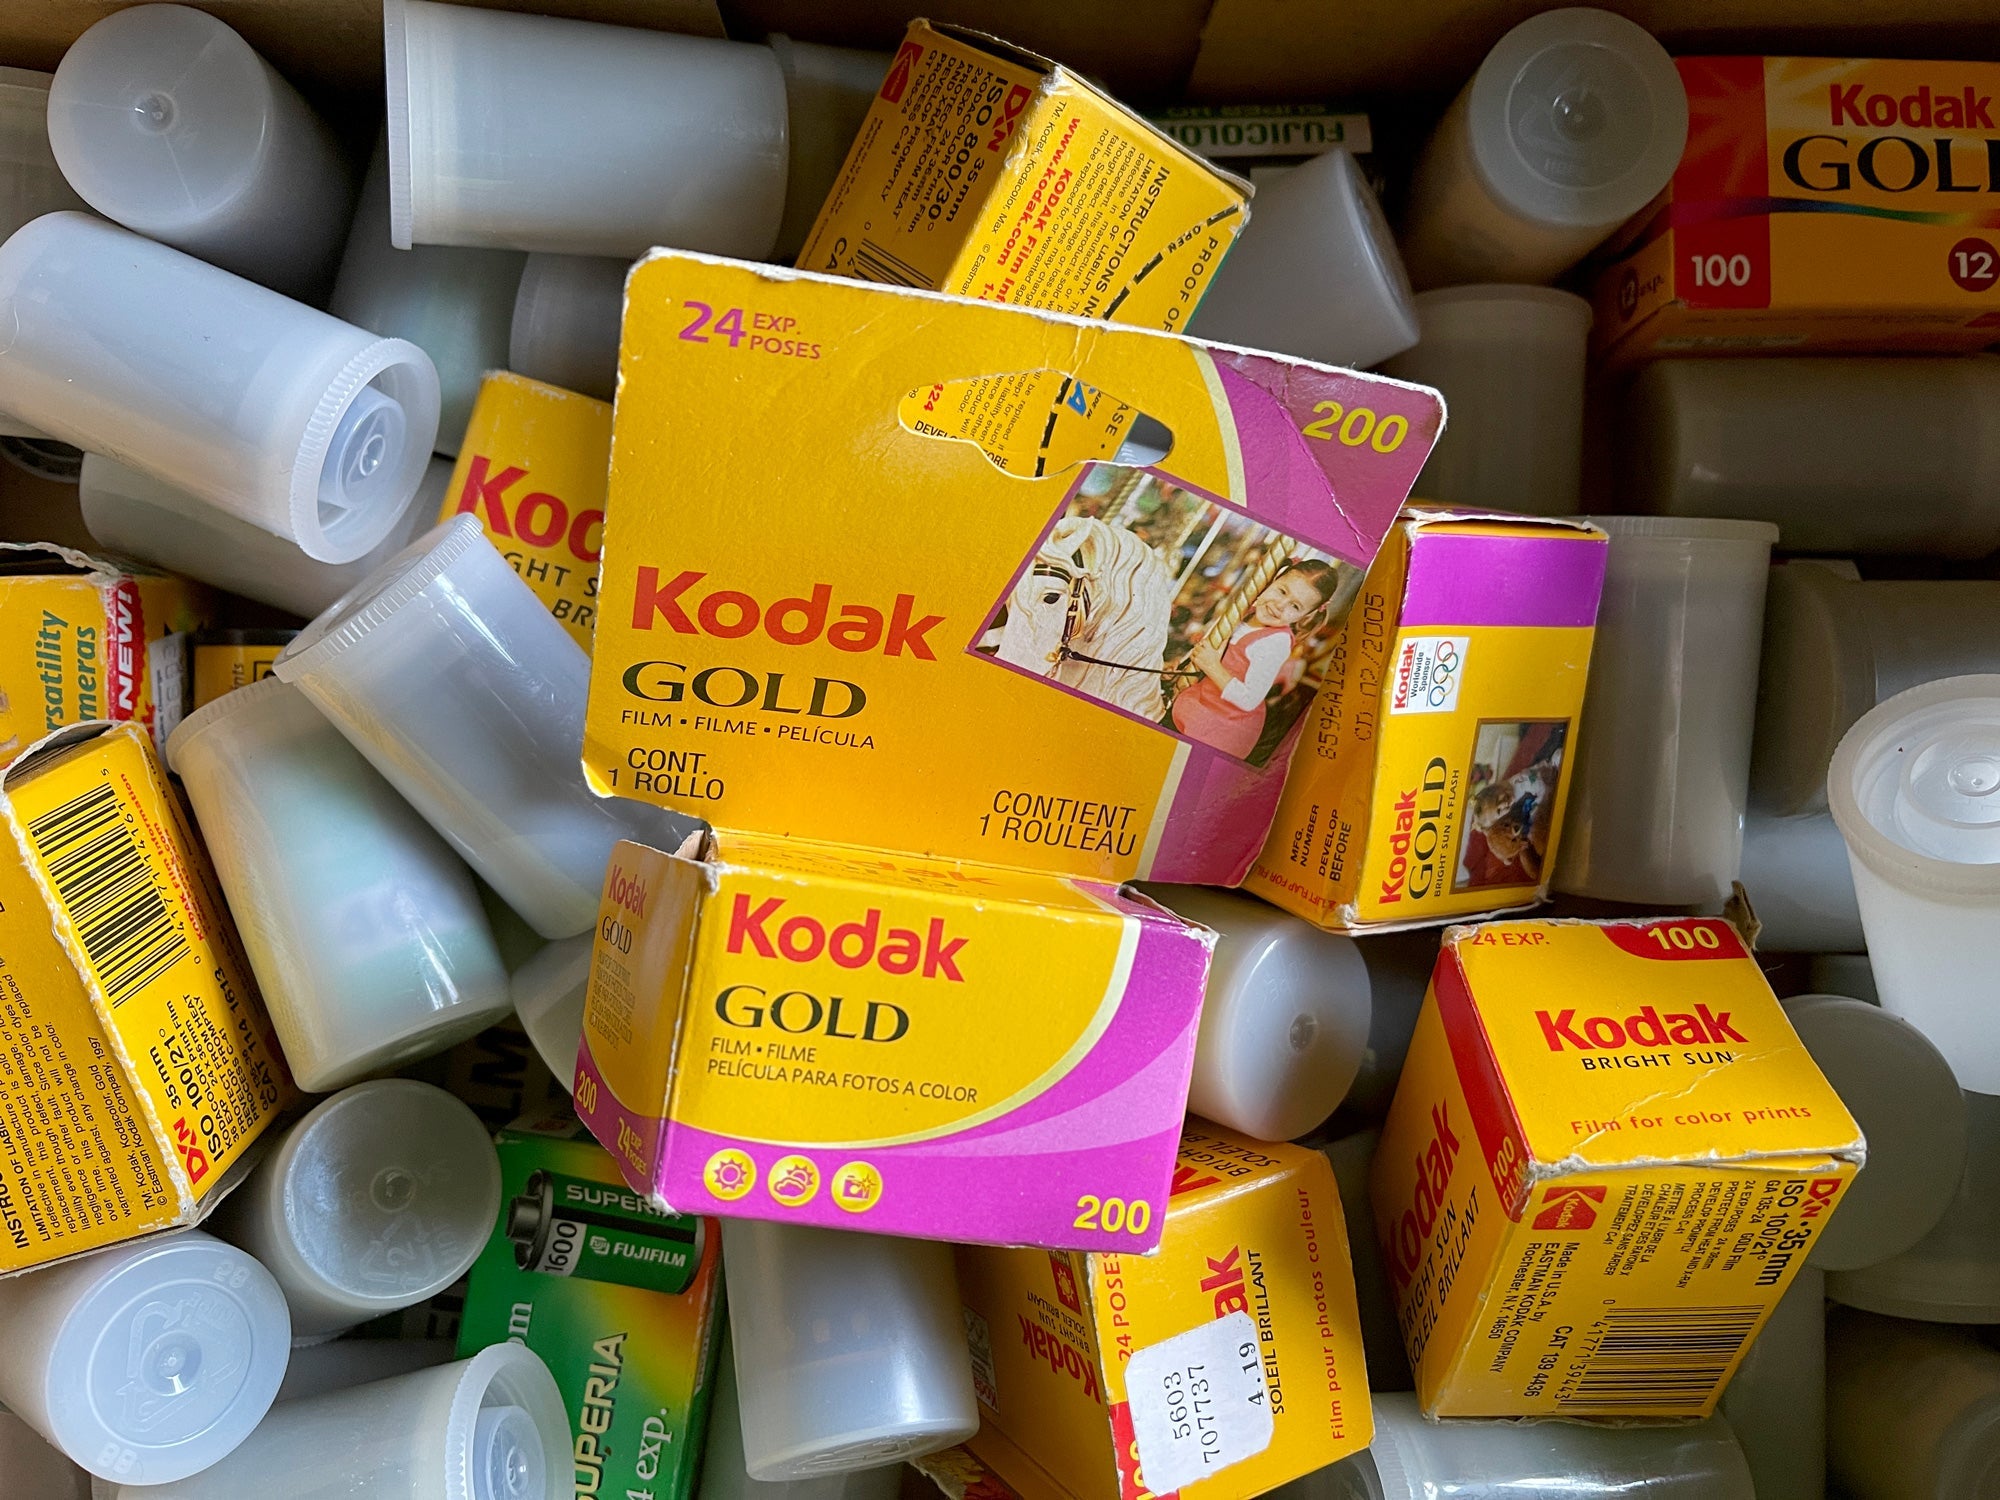 Kodak film boxes.